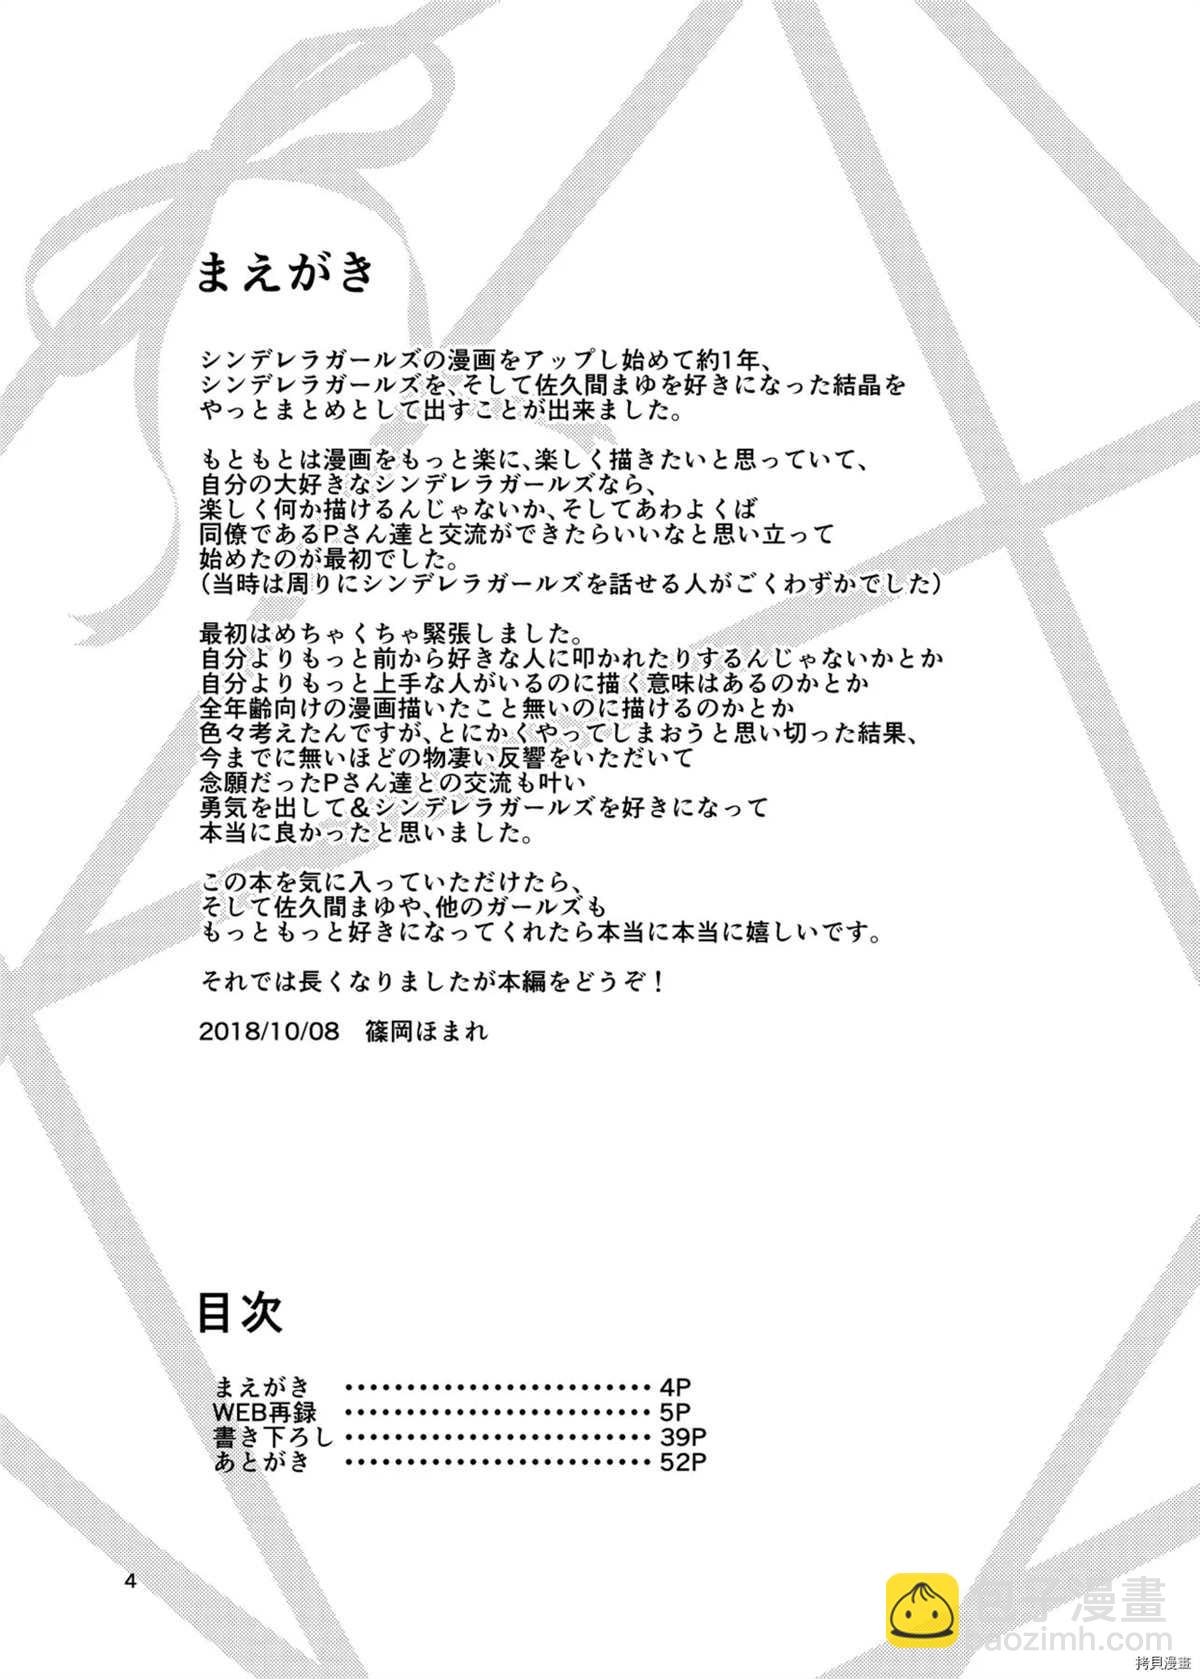 Mayu no Memorial Book - 第1話(1/2) - 4